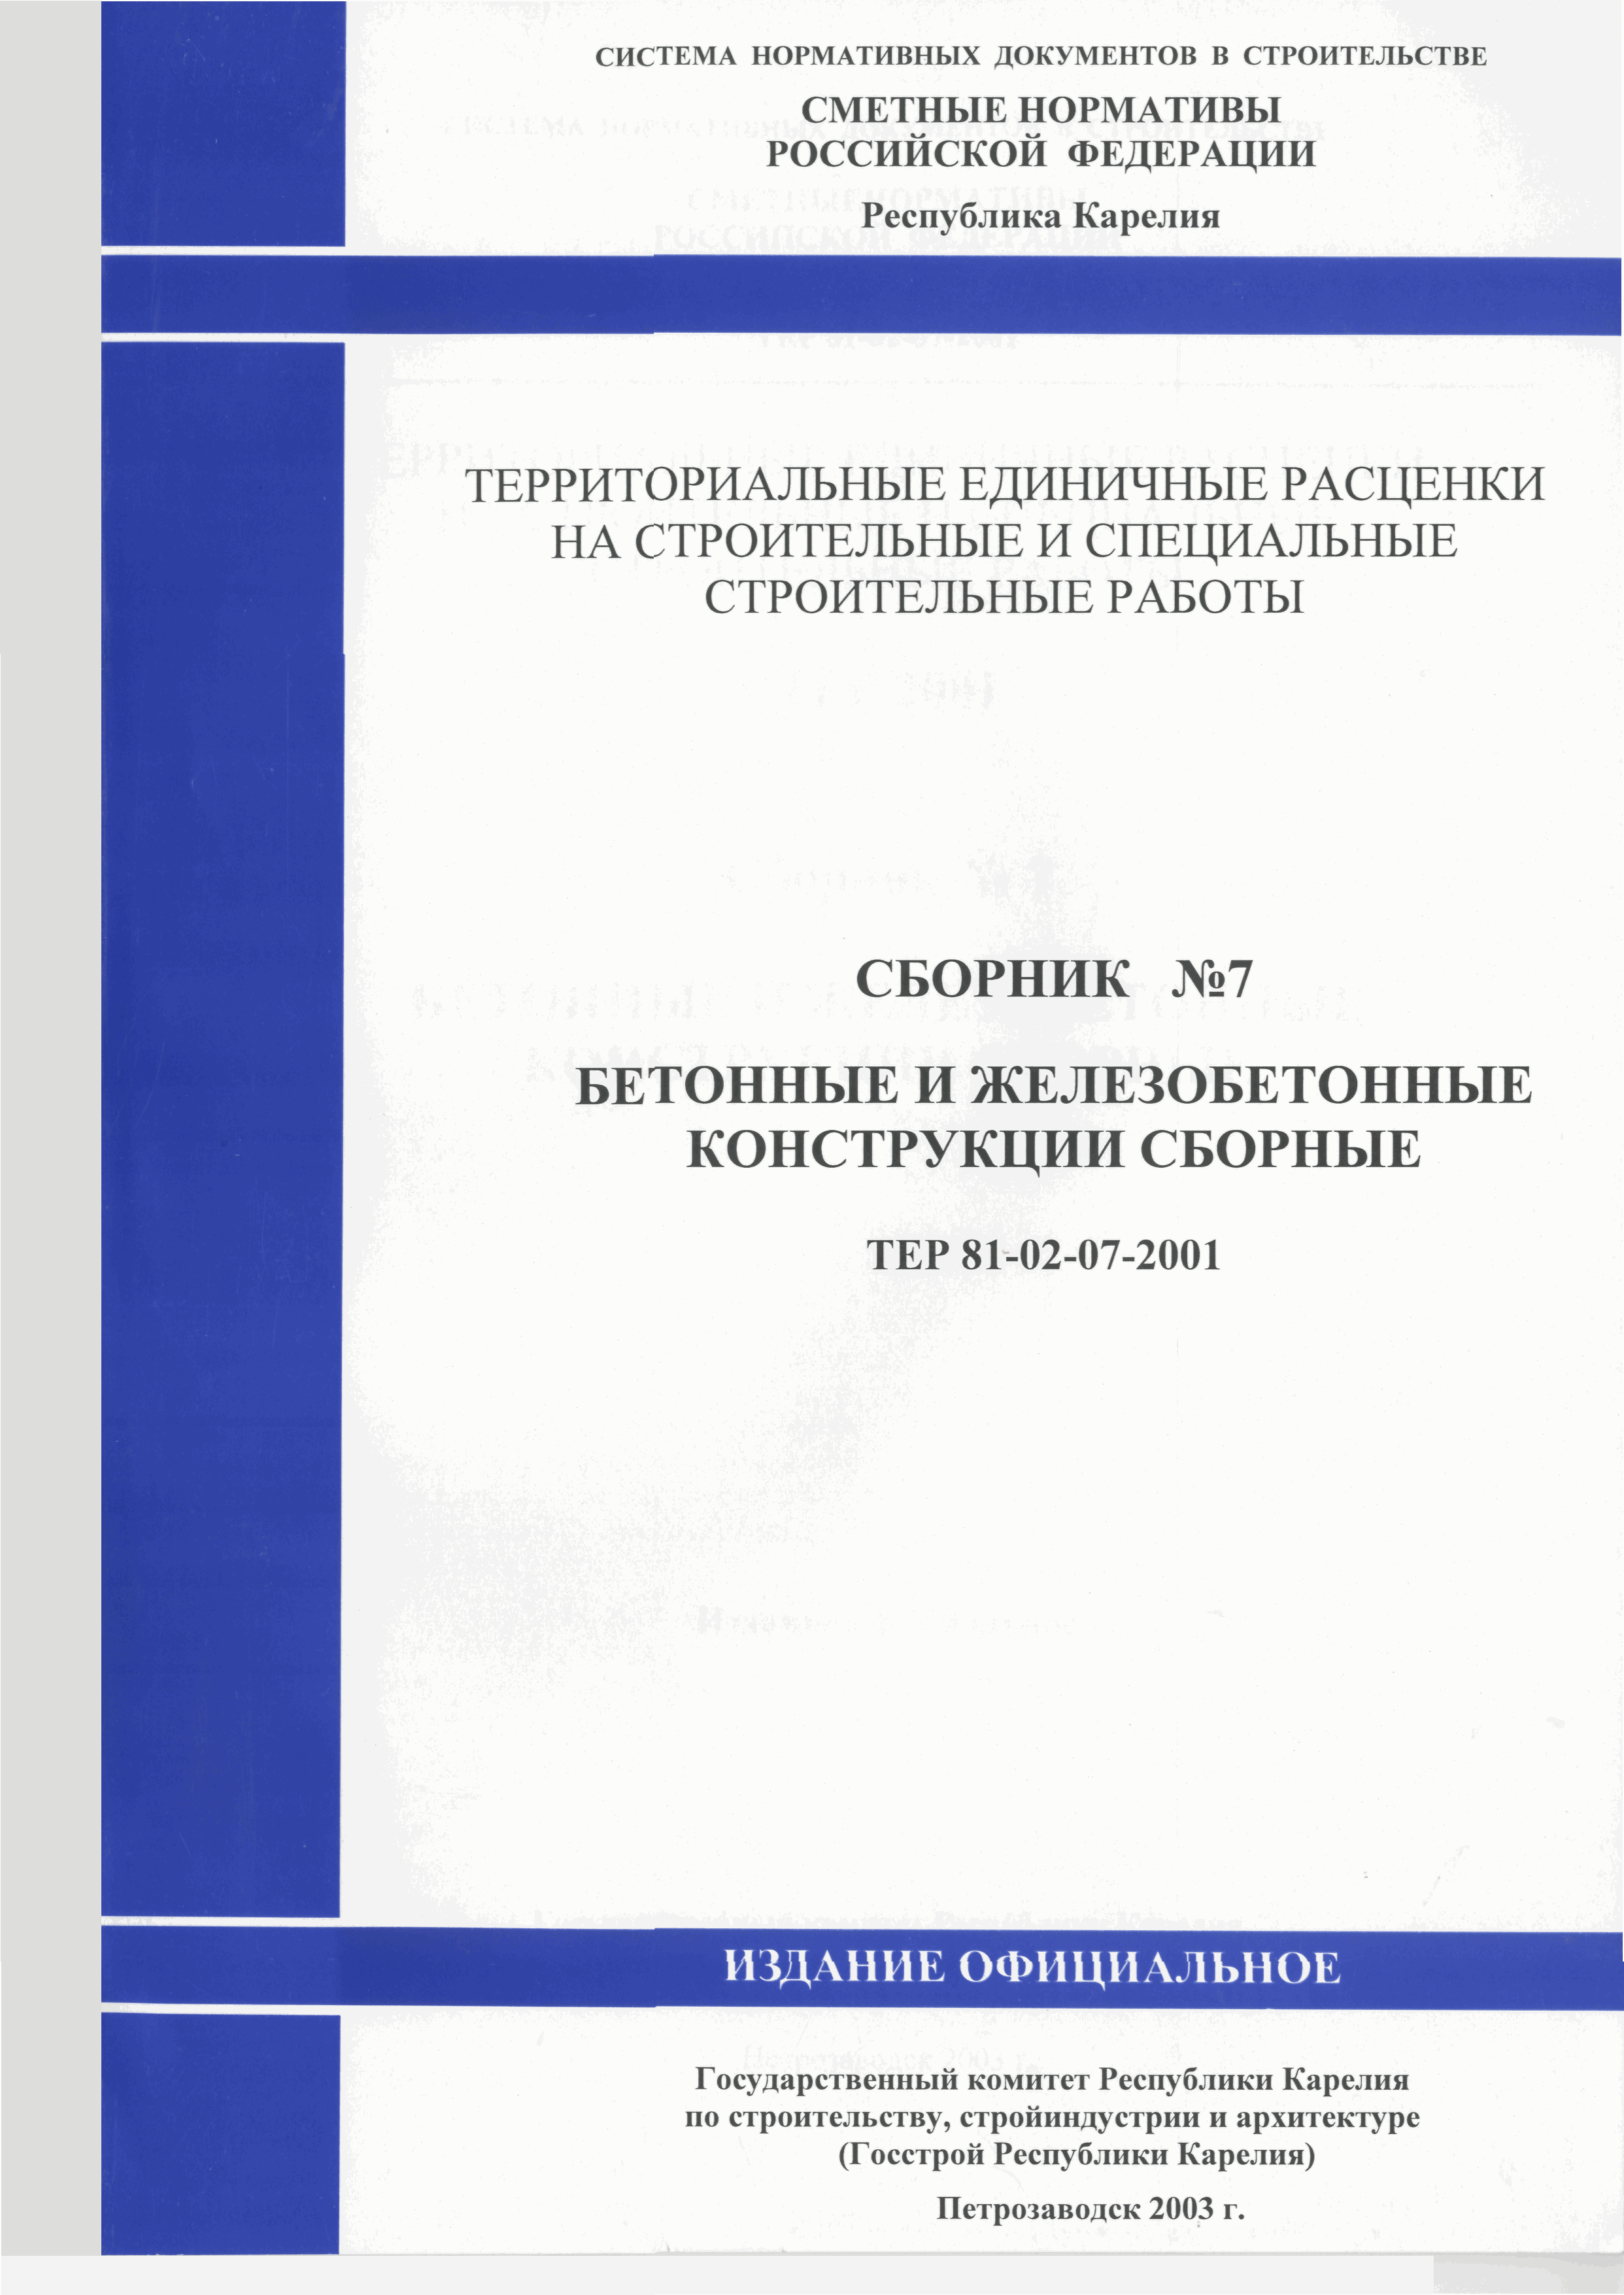 ТЕР Республика Карелия 2001-07